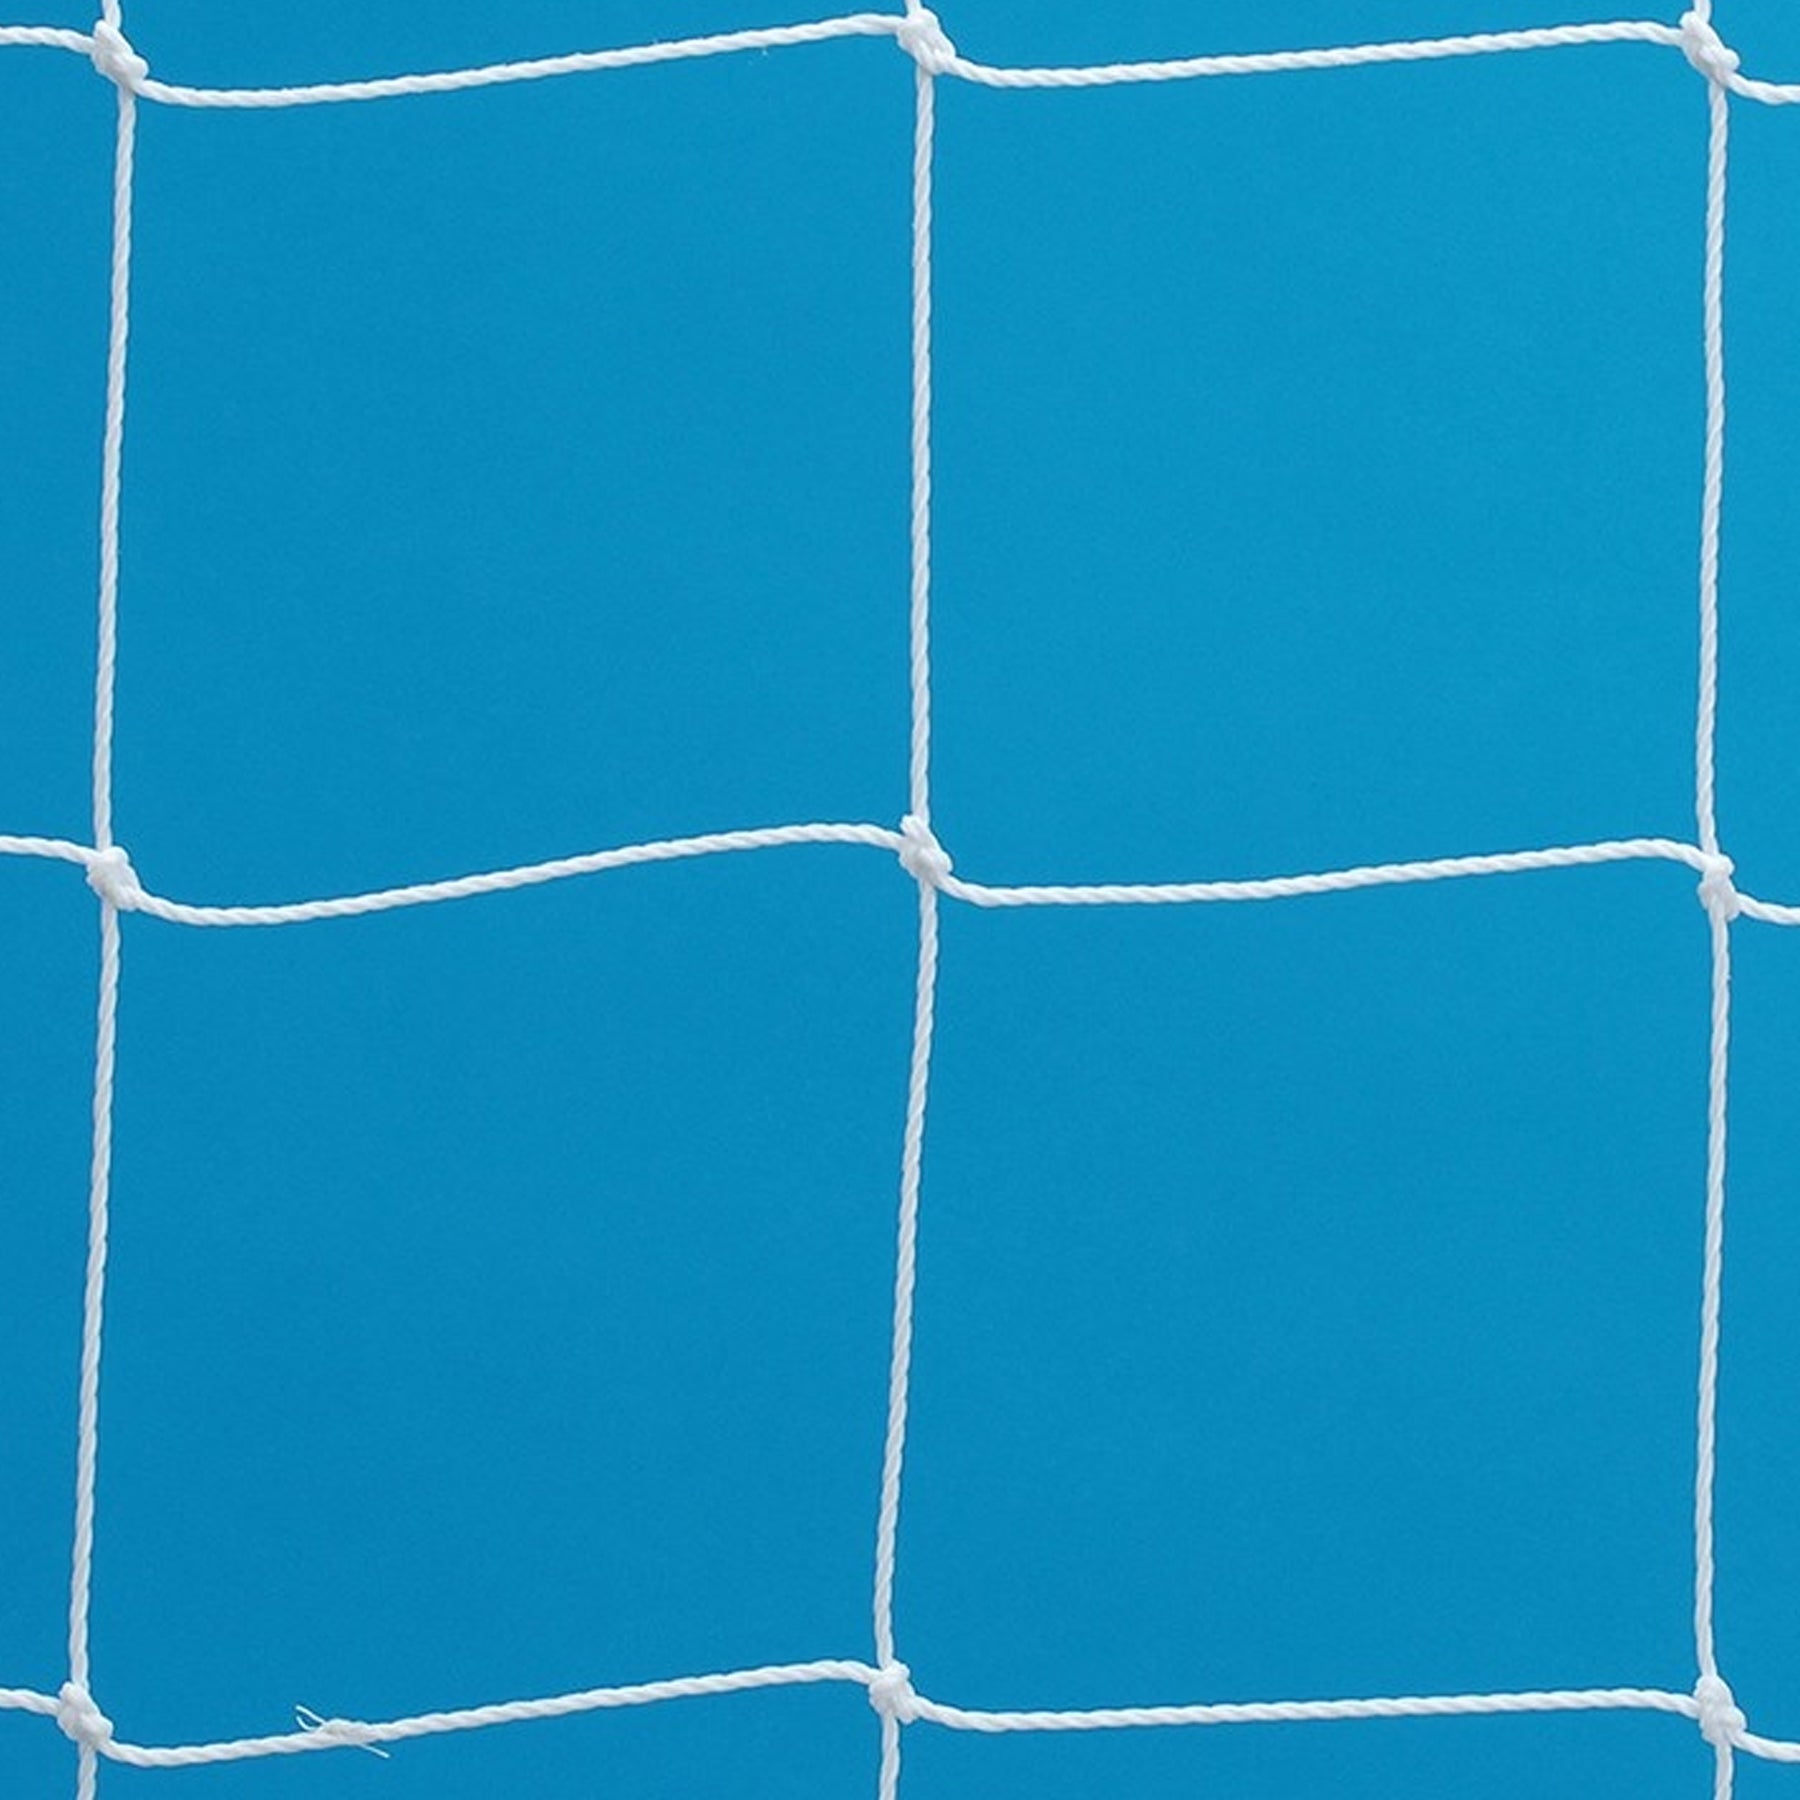 5-a-side Football Goal Nets